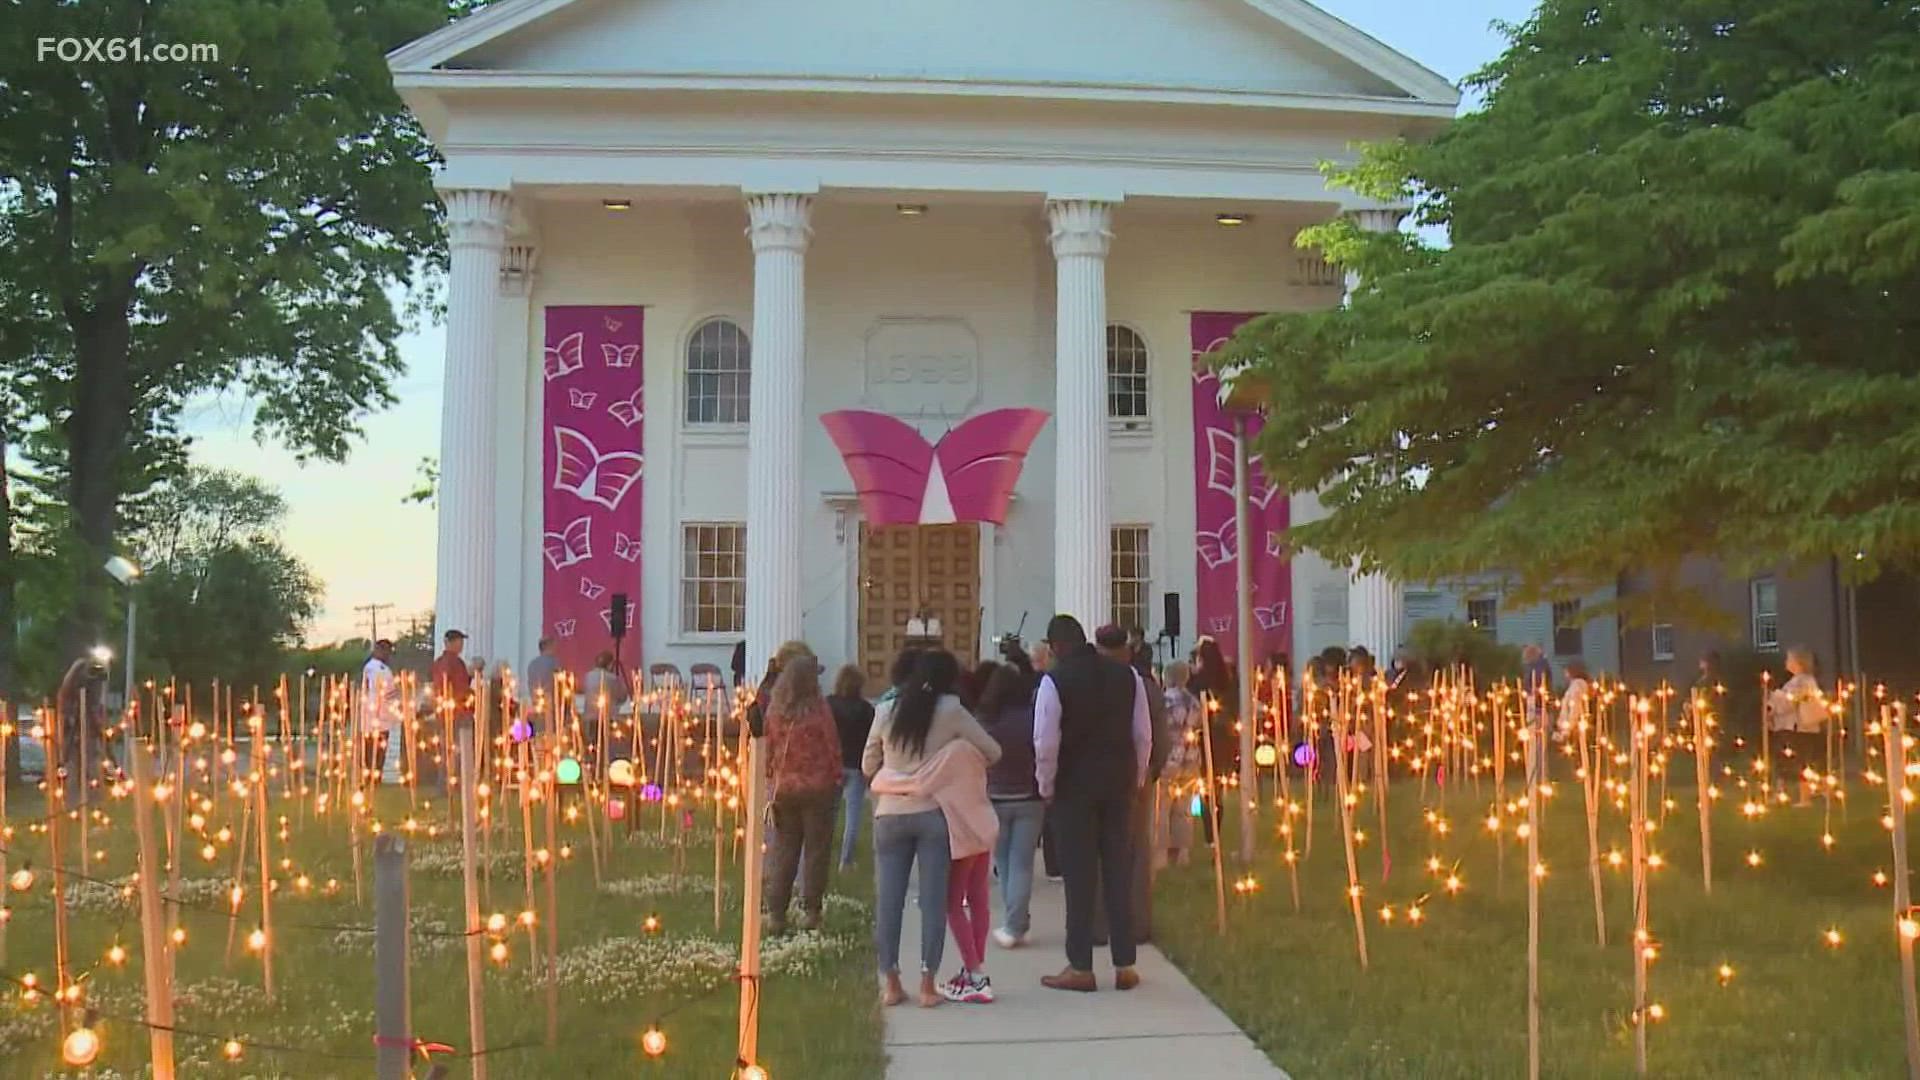 1000 light bulbs outside Bloomfield Congregational Church represent COVID victims. 10 colorful bulbs represent Buffalo victims. One star represents Uvalde victims